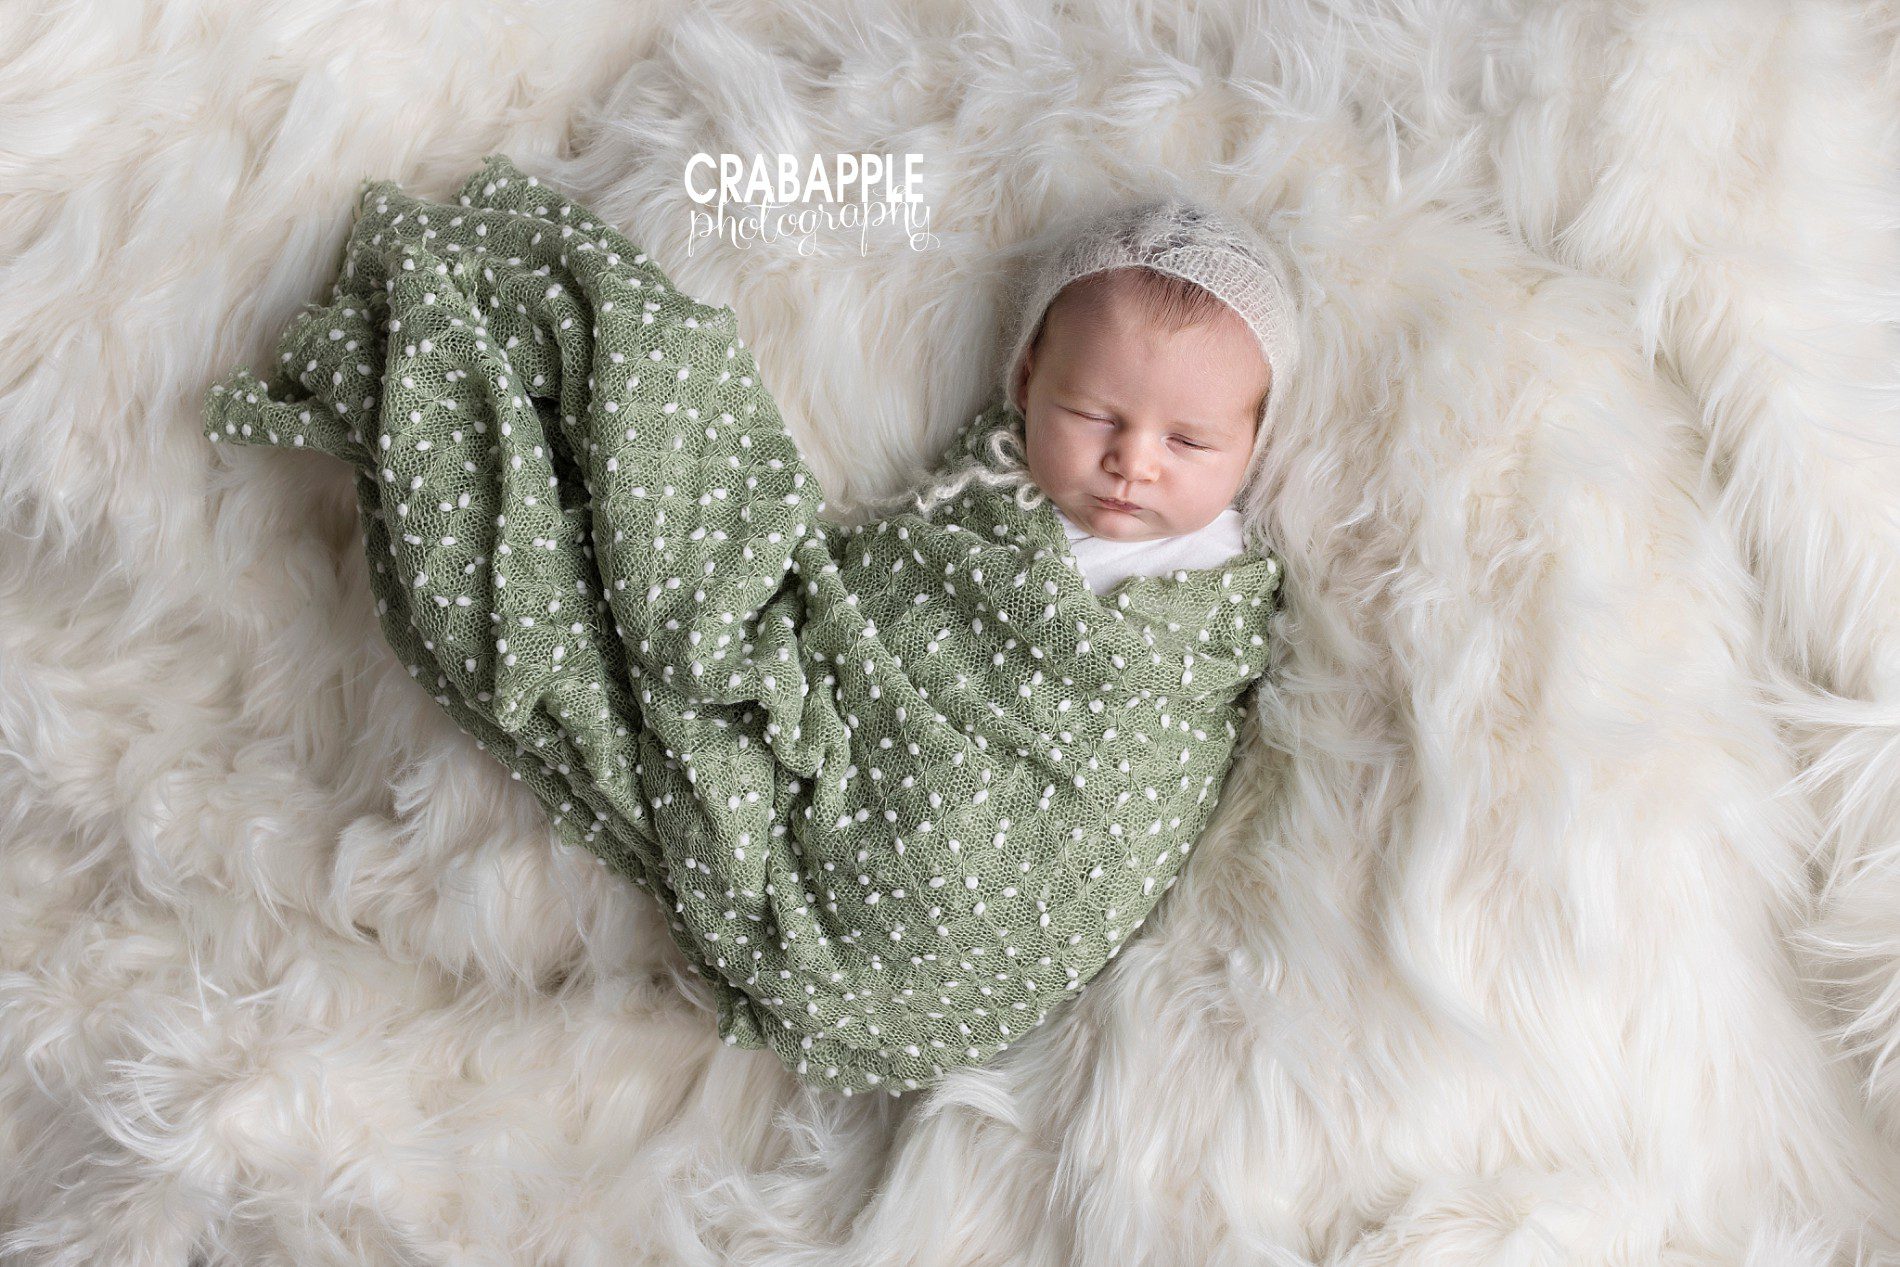 using green in classic newborn photos for girls